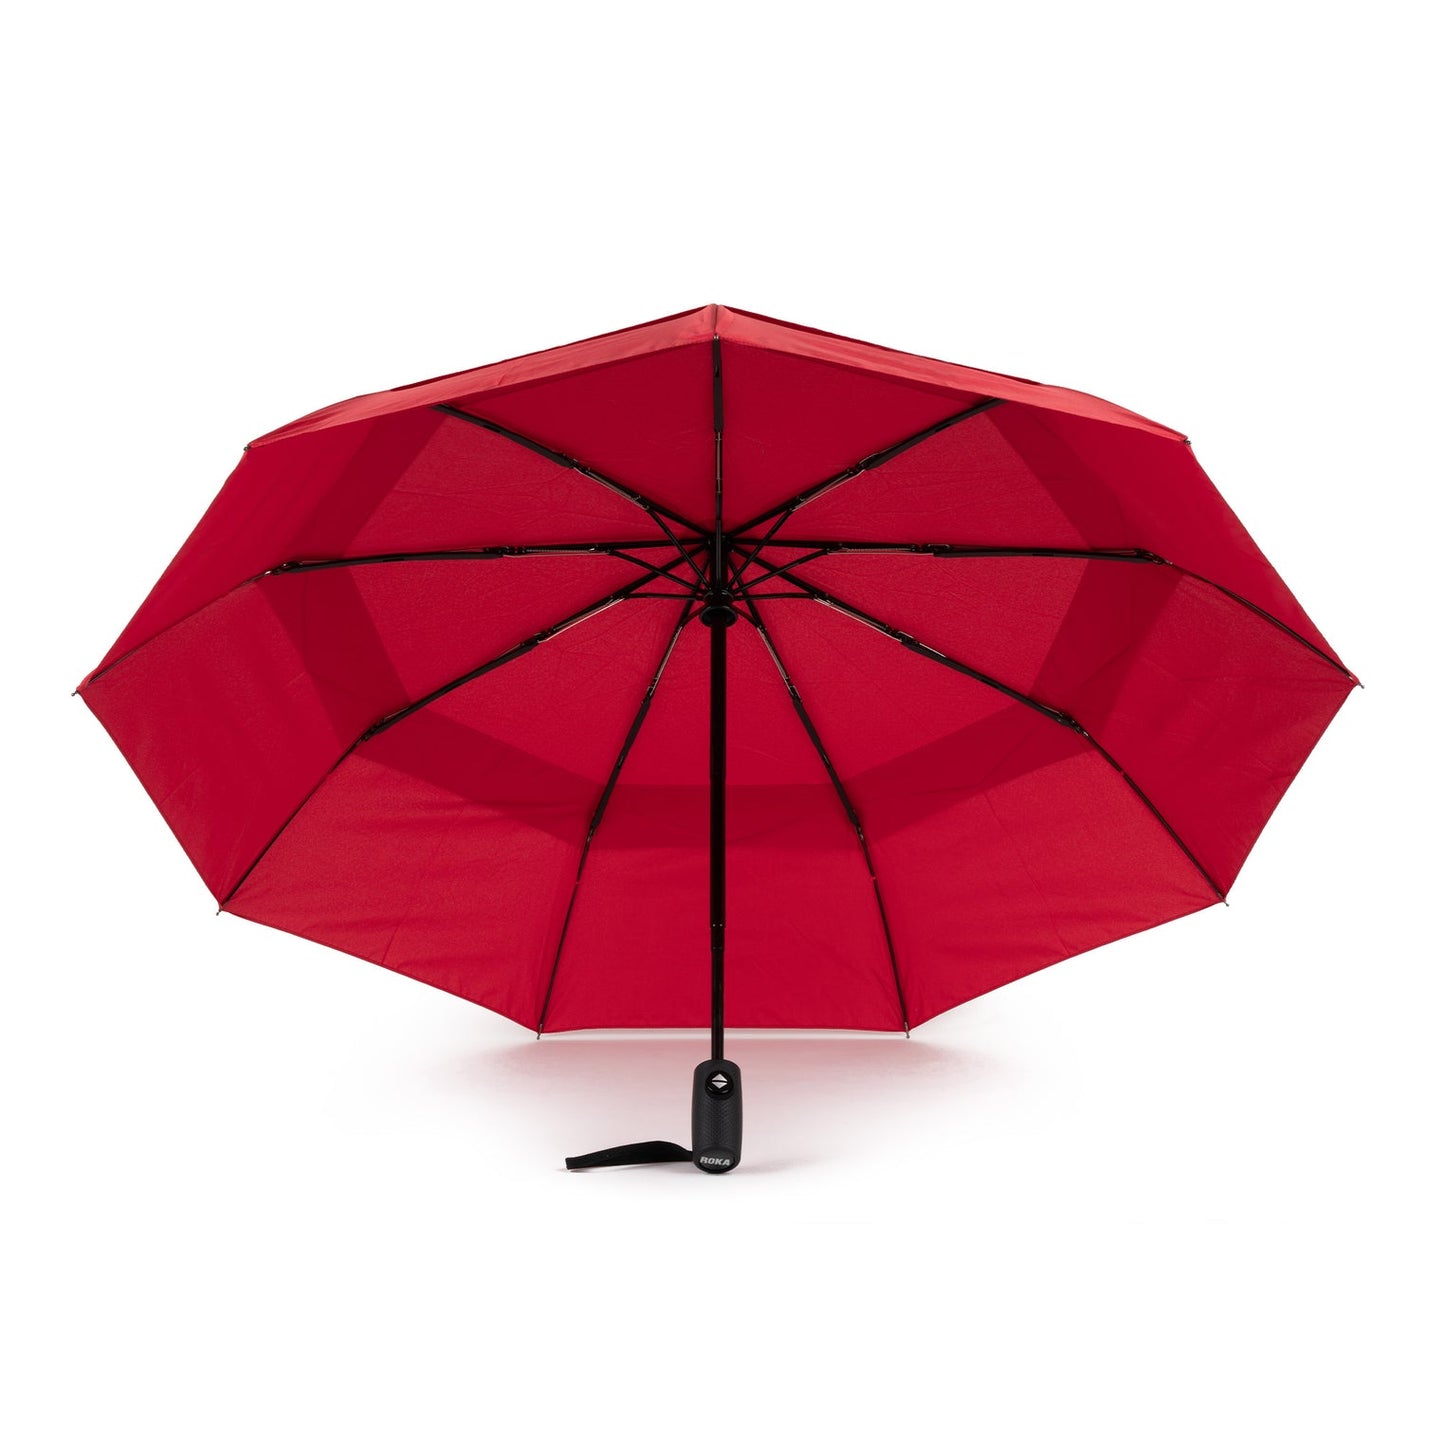 Waterloo nylon cranberry - recycled & eco-friendly umbrella